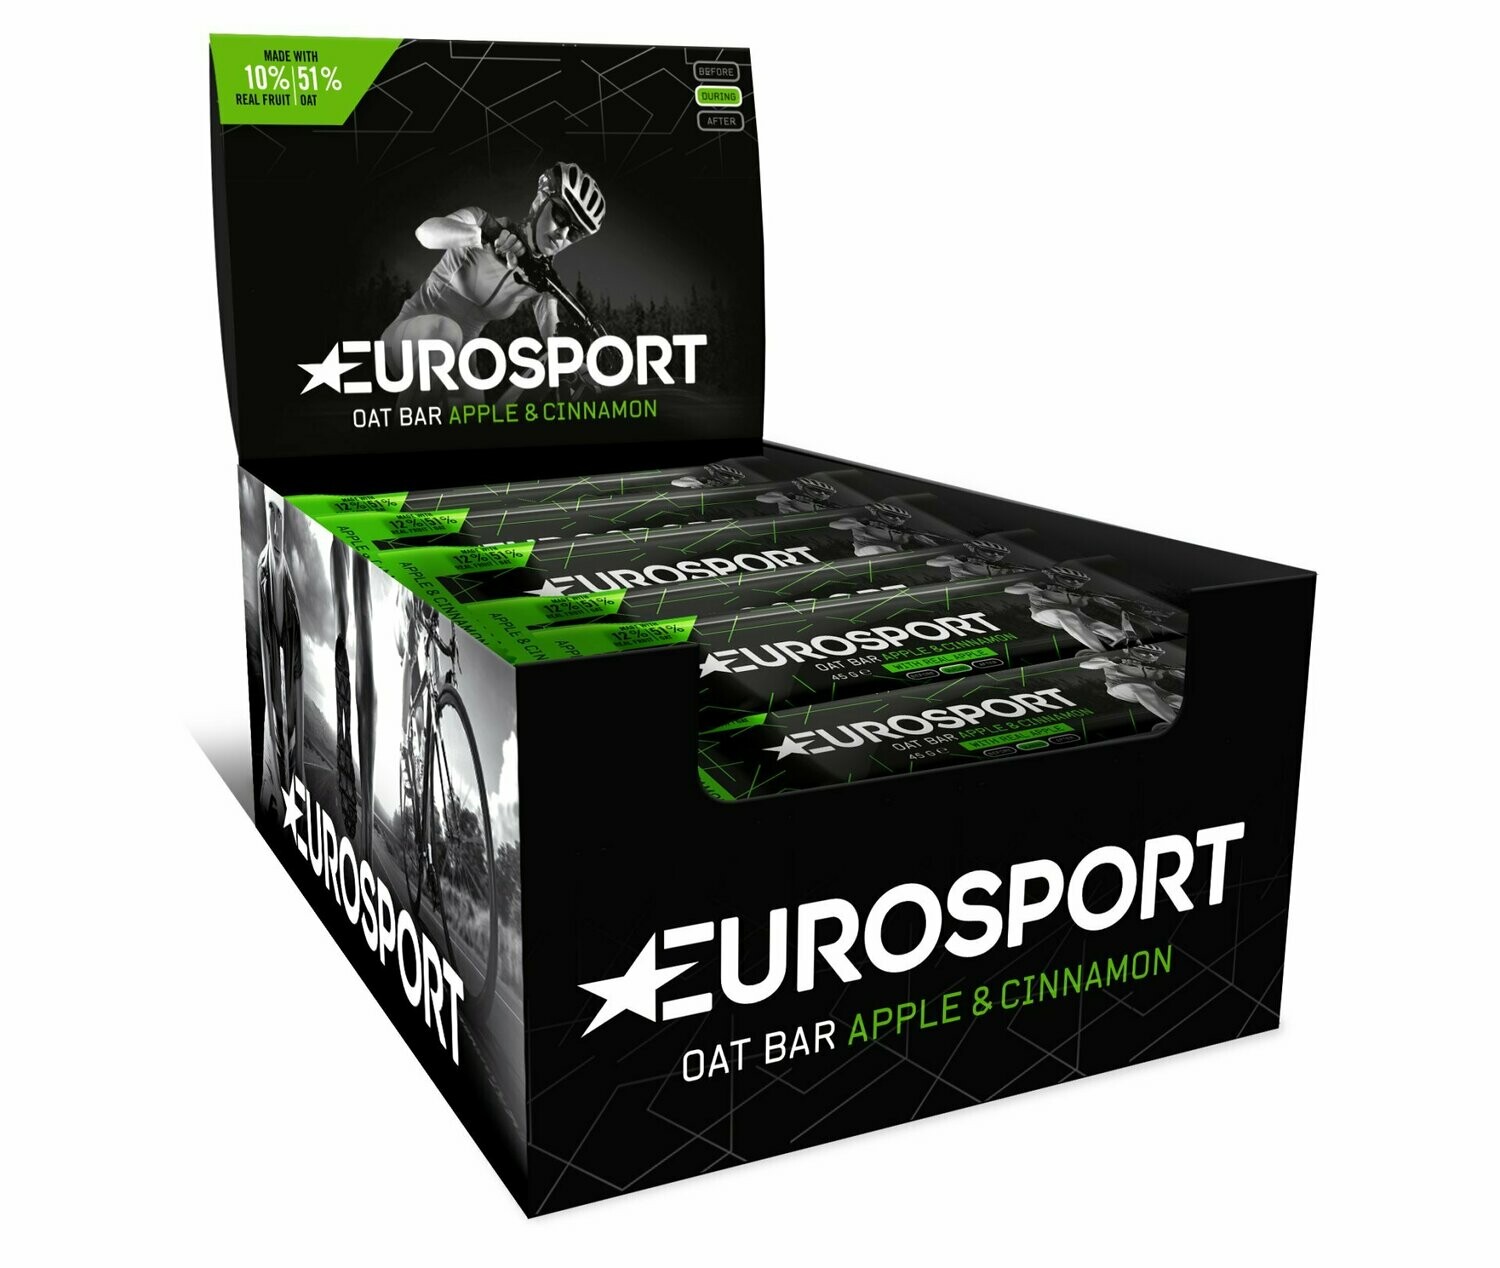 Eurosport Oat Bar Box "Apple & Cinnamon" (20Pcs)